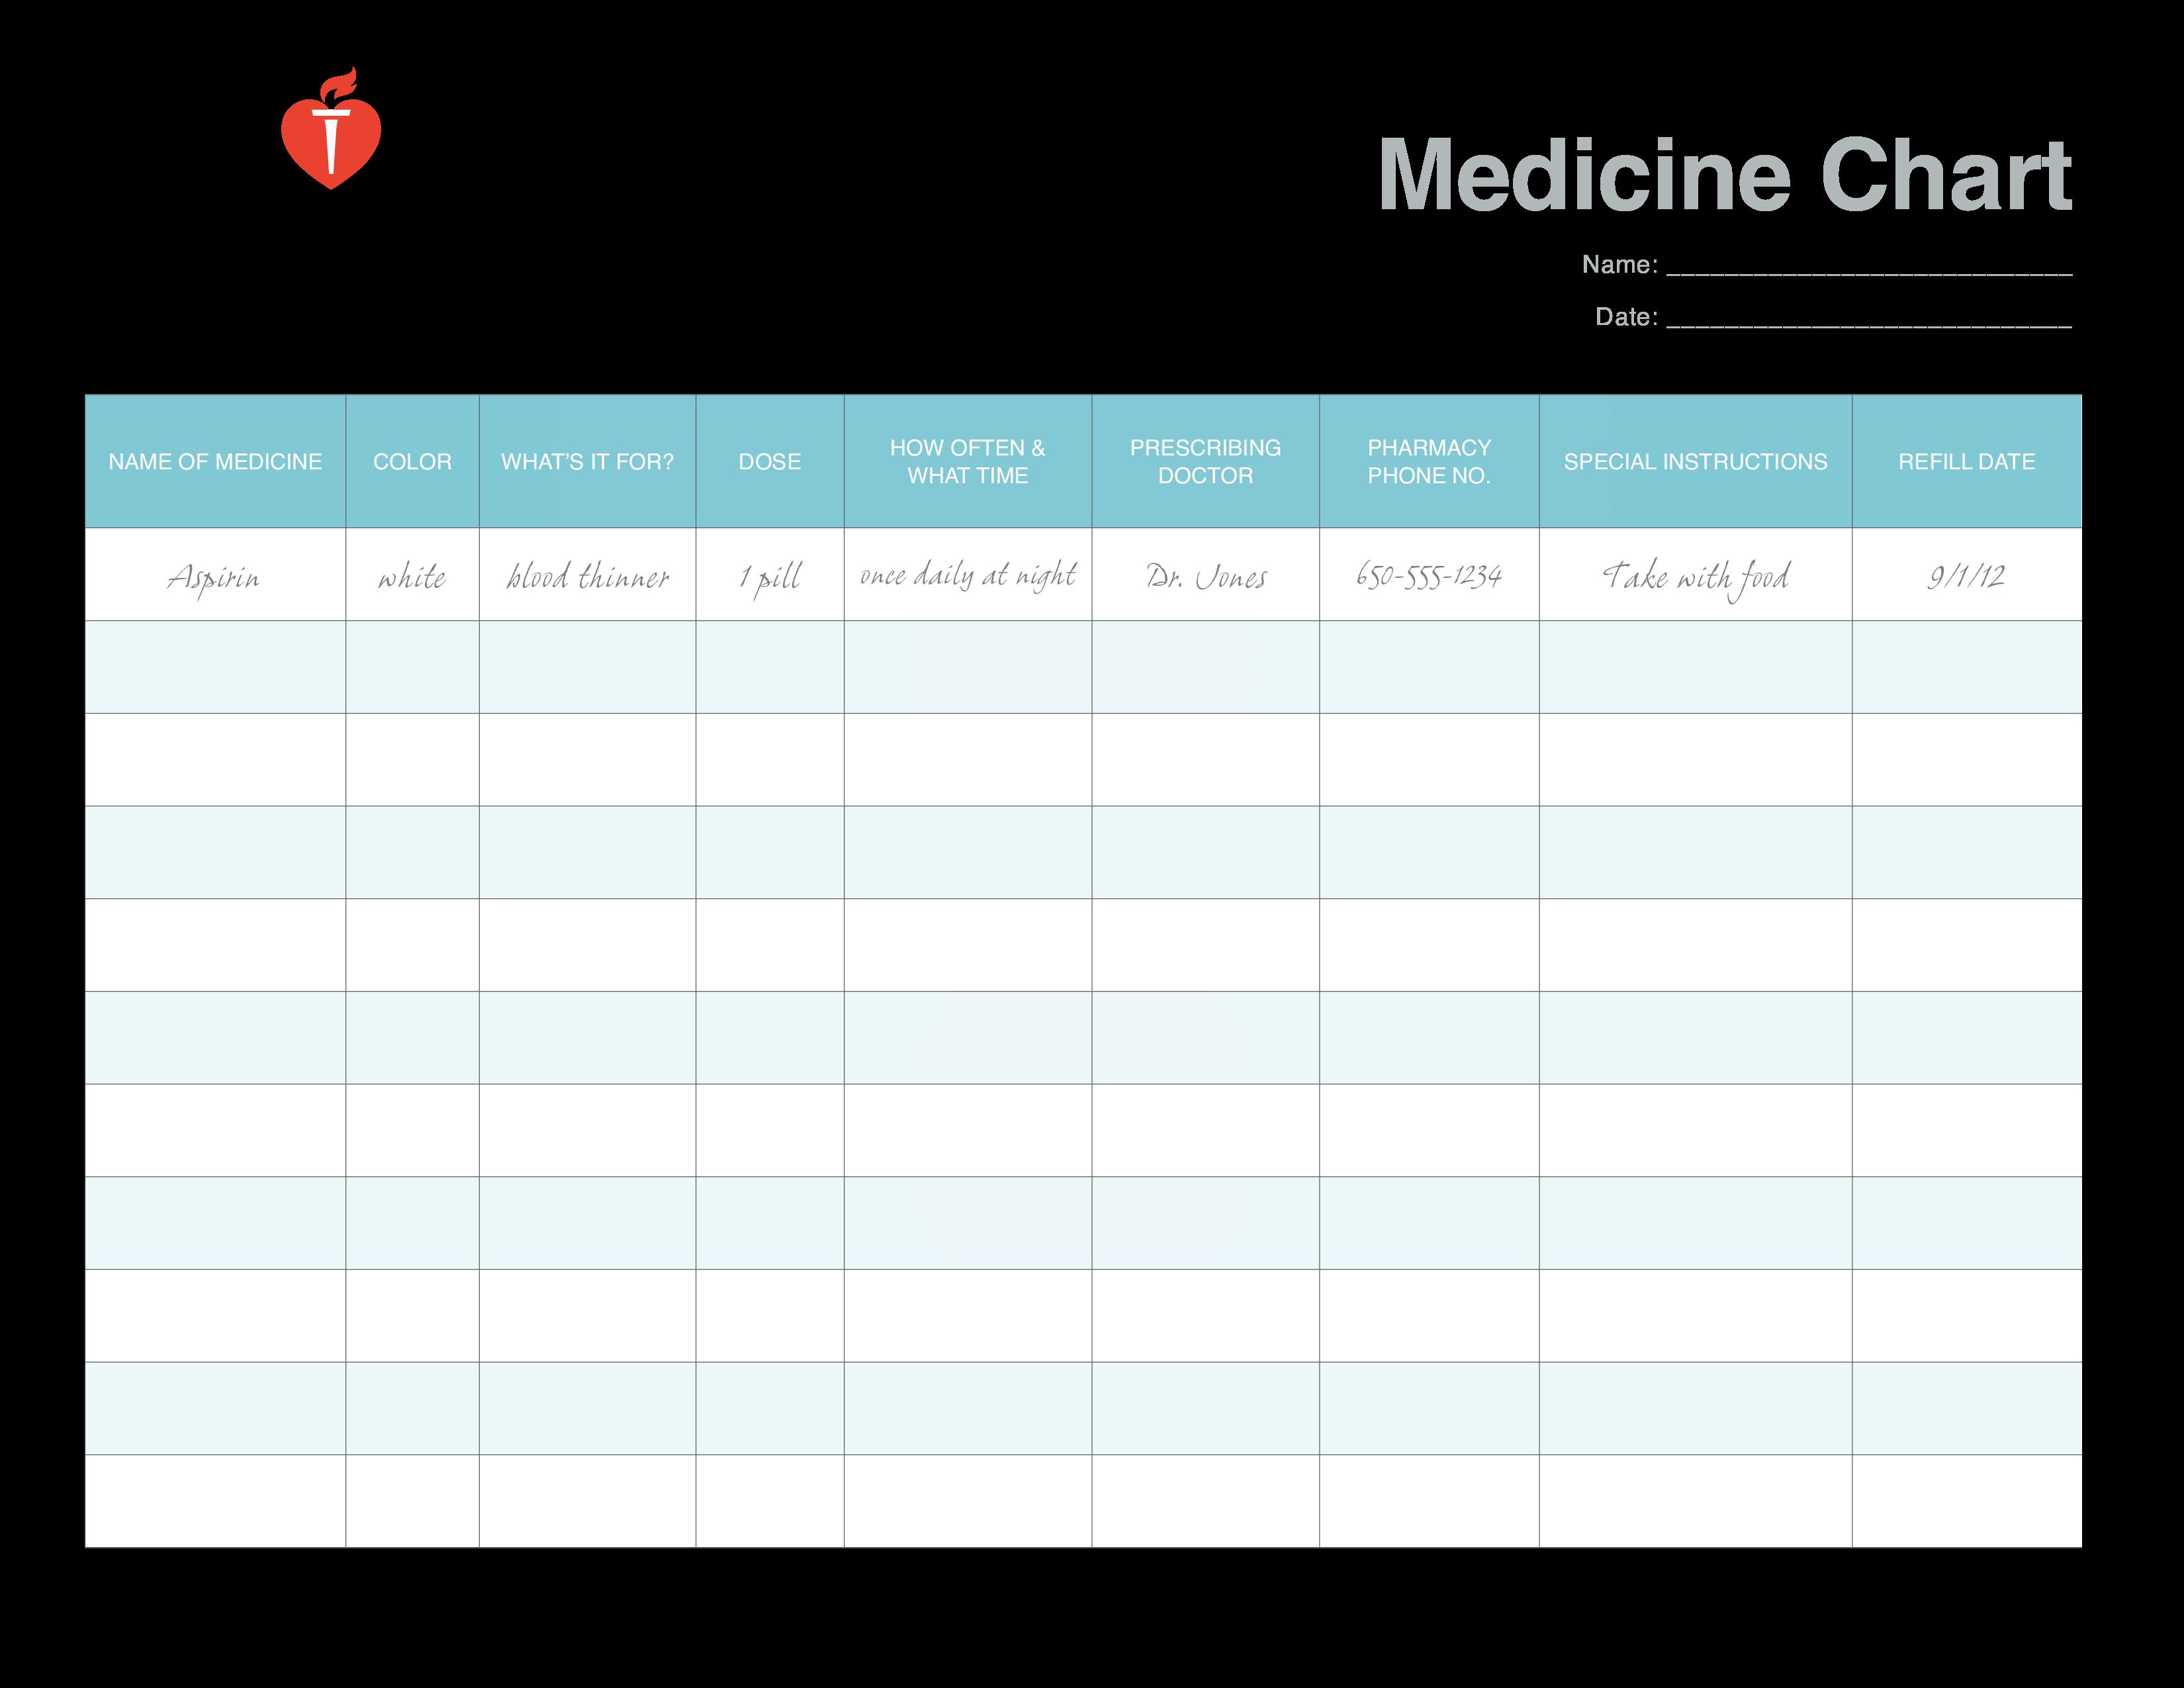 Medicine_Chart main image